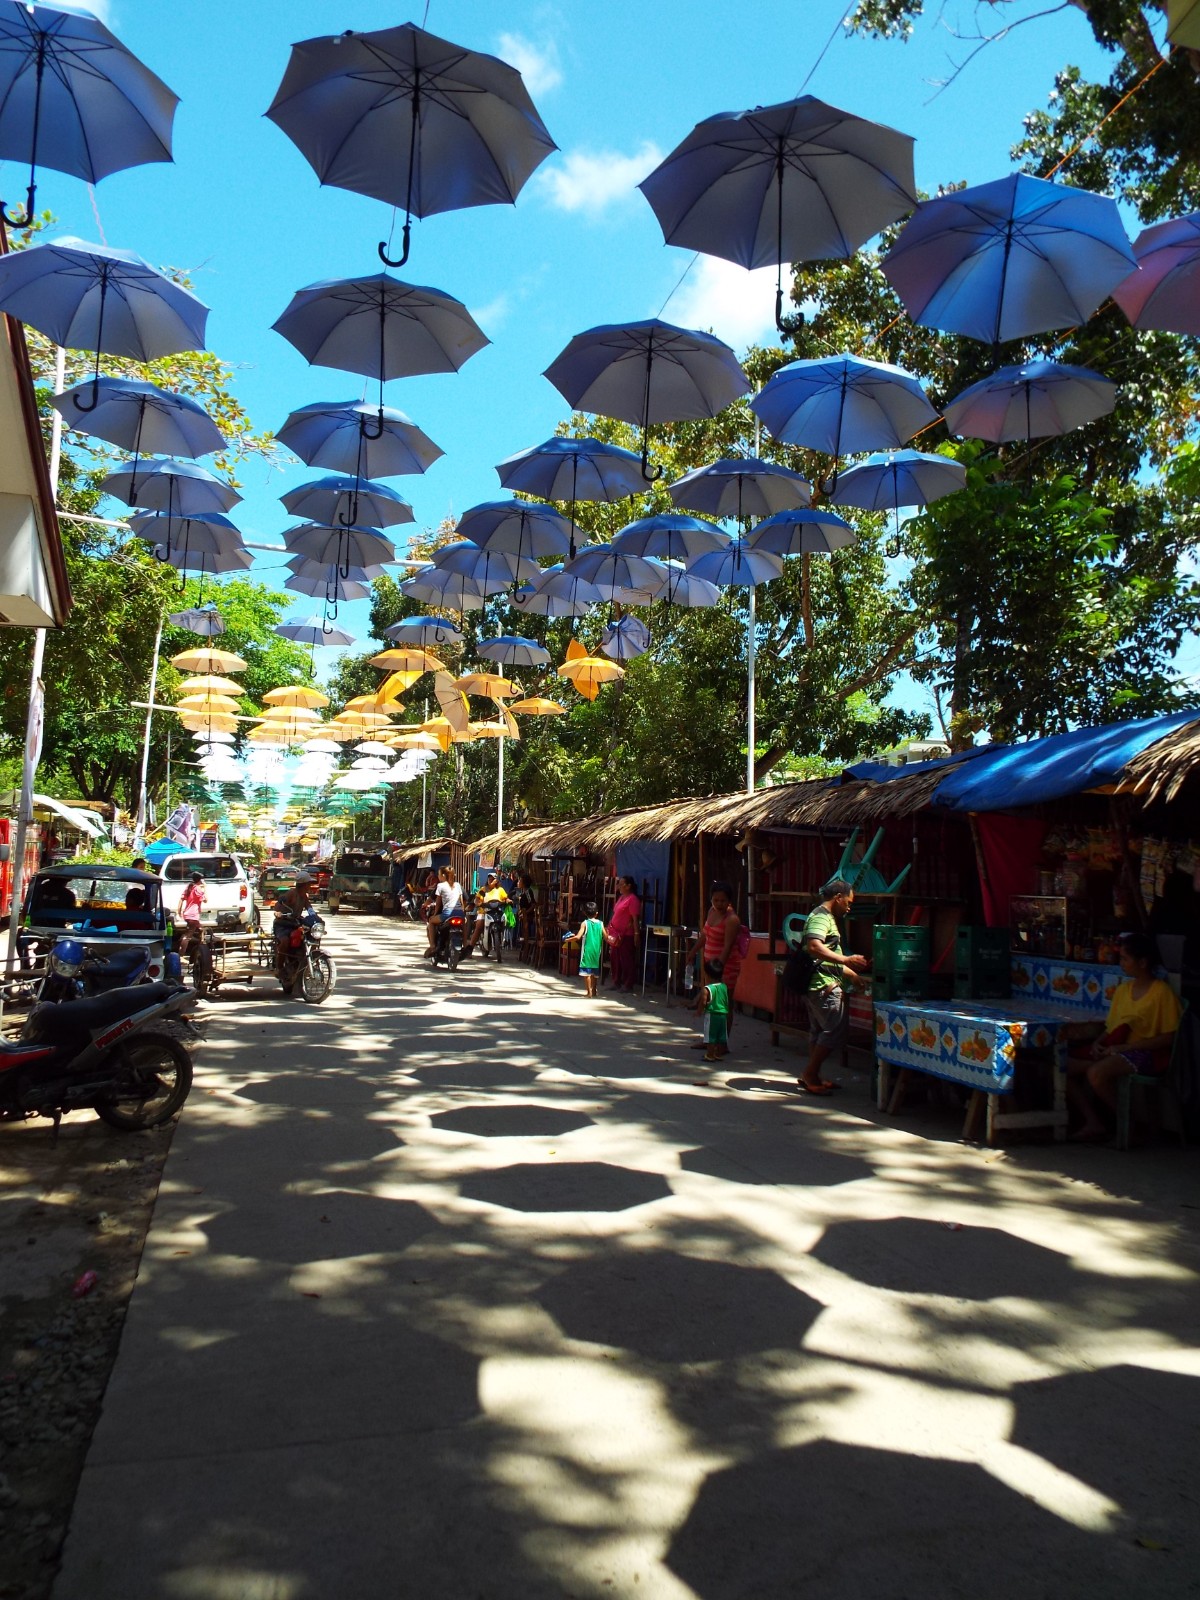 Street of umbrella sombreros